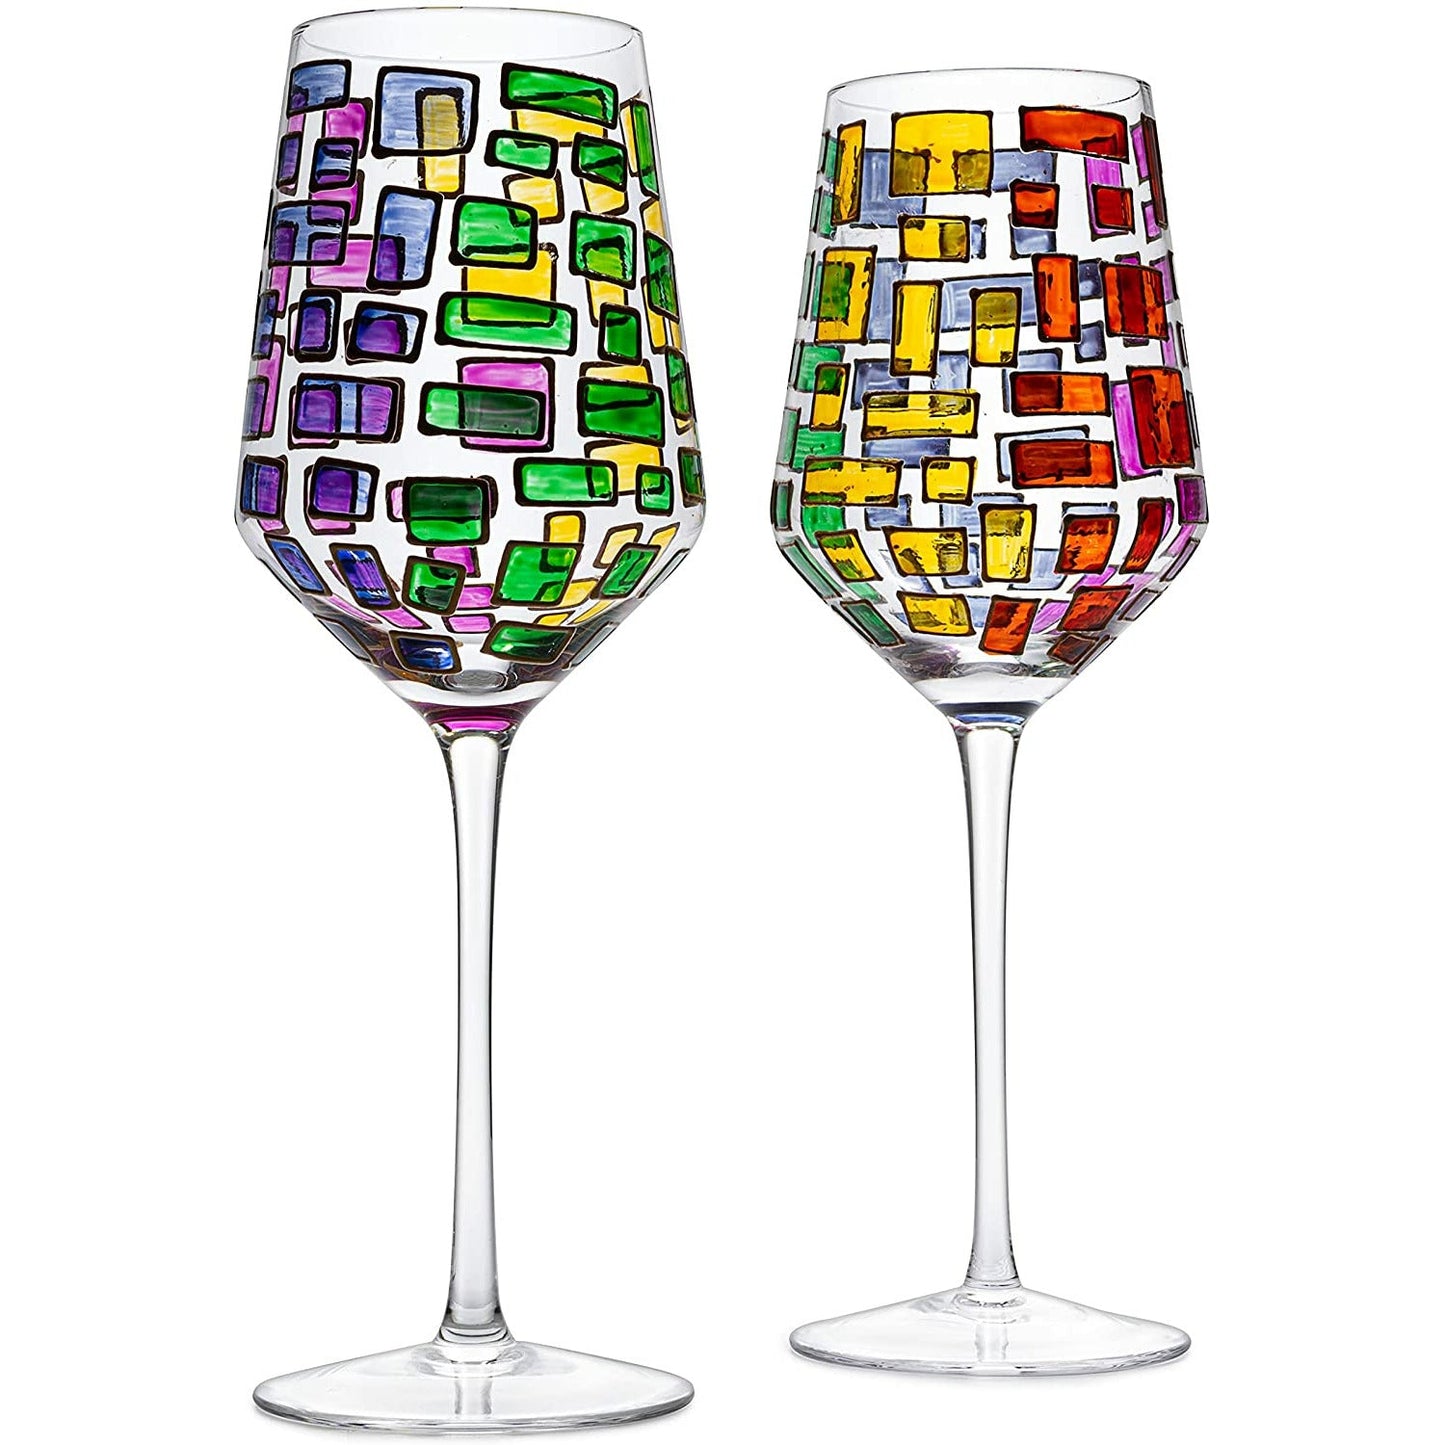 Mosaic Rainbow Wine Glass - Detroit Institute of Arts Museum Shop